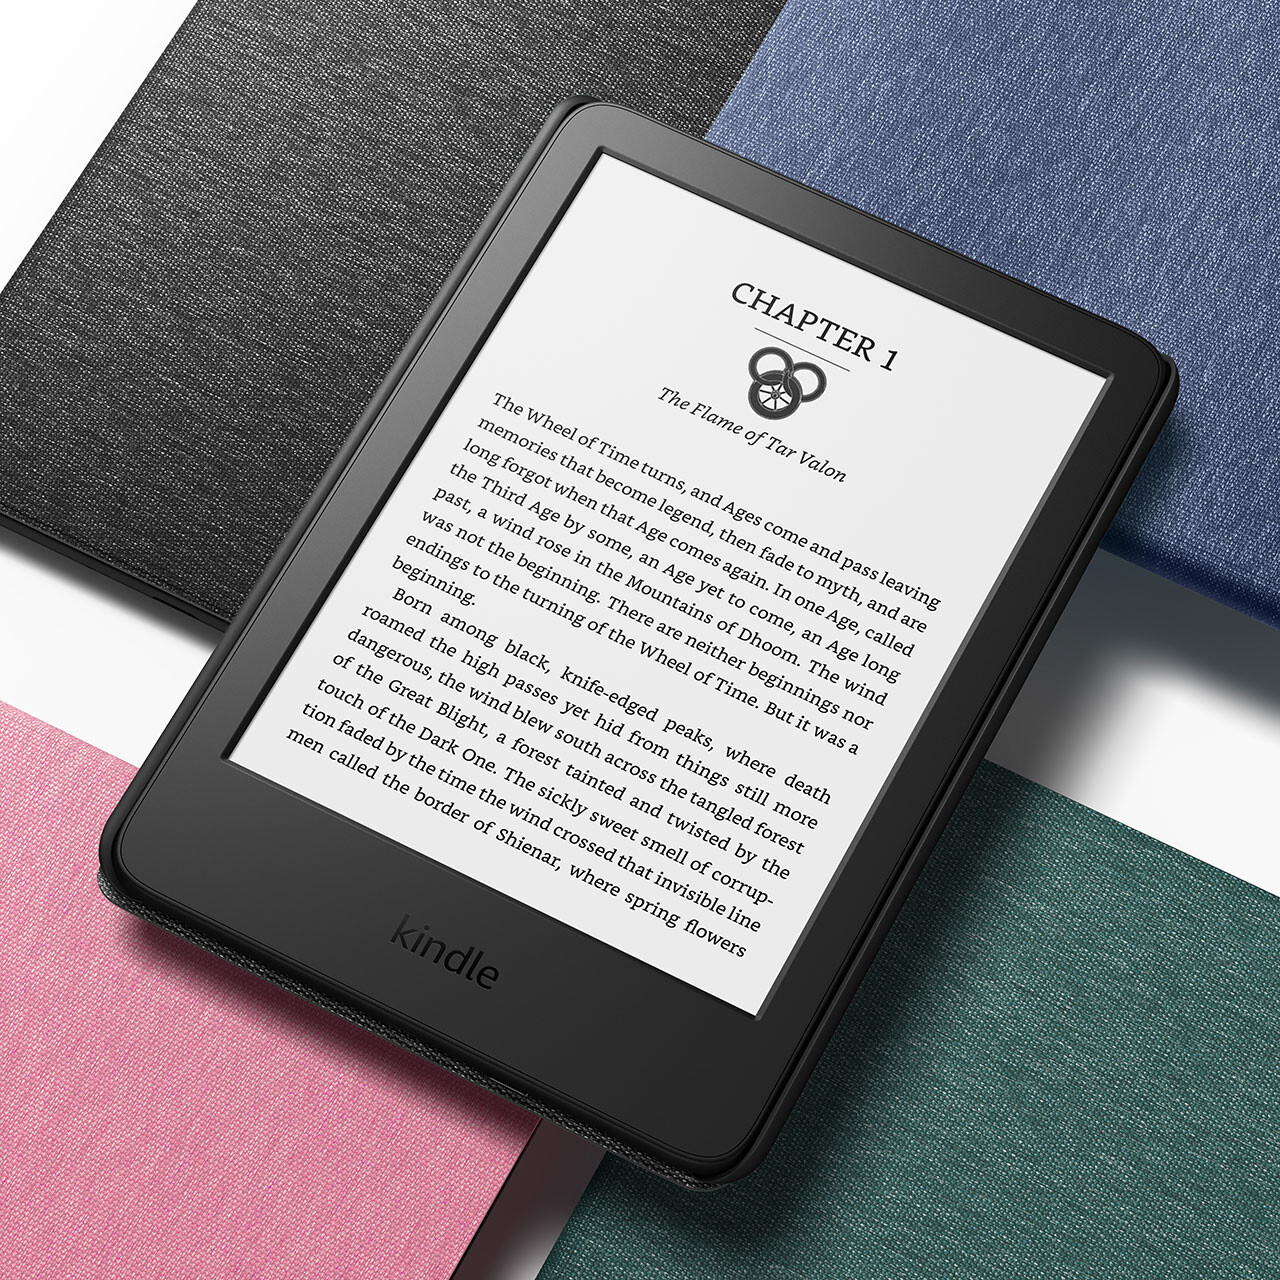 Amazon's new Kindle and Kindle Kids have 6" 300 ppi HighRes Display